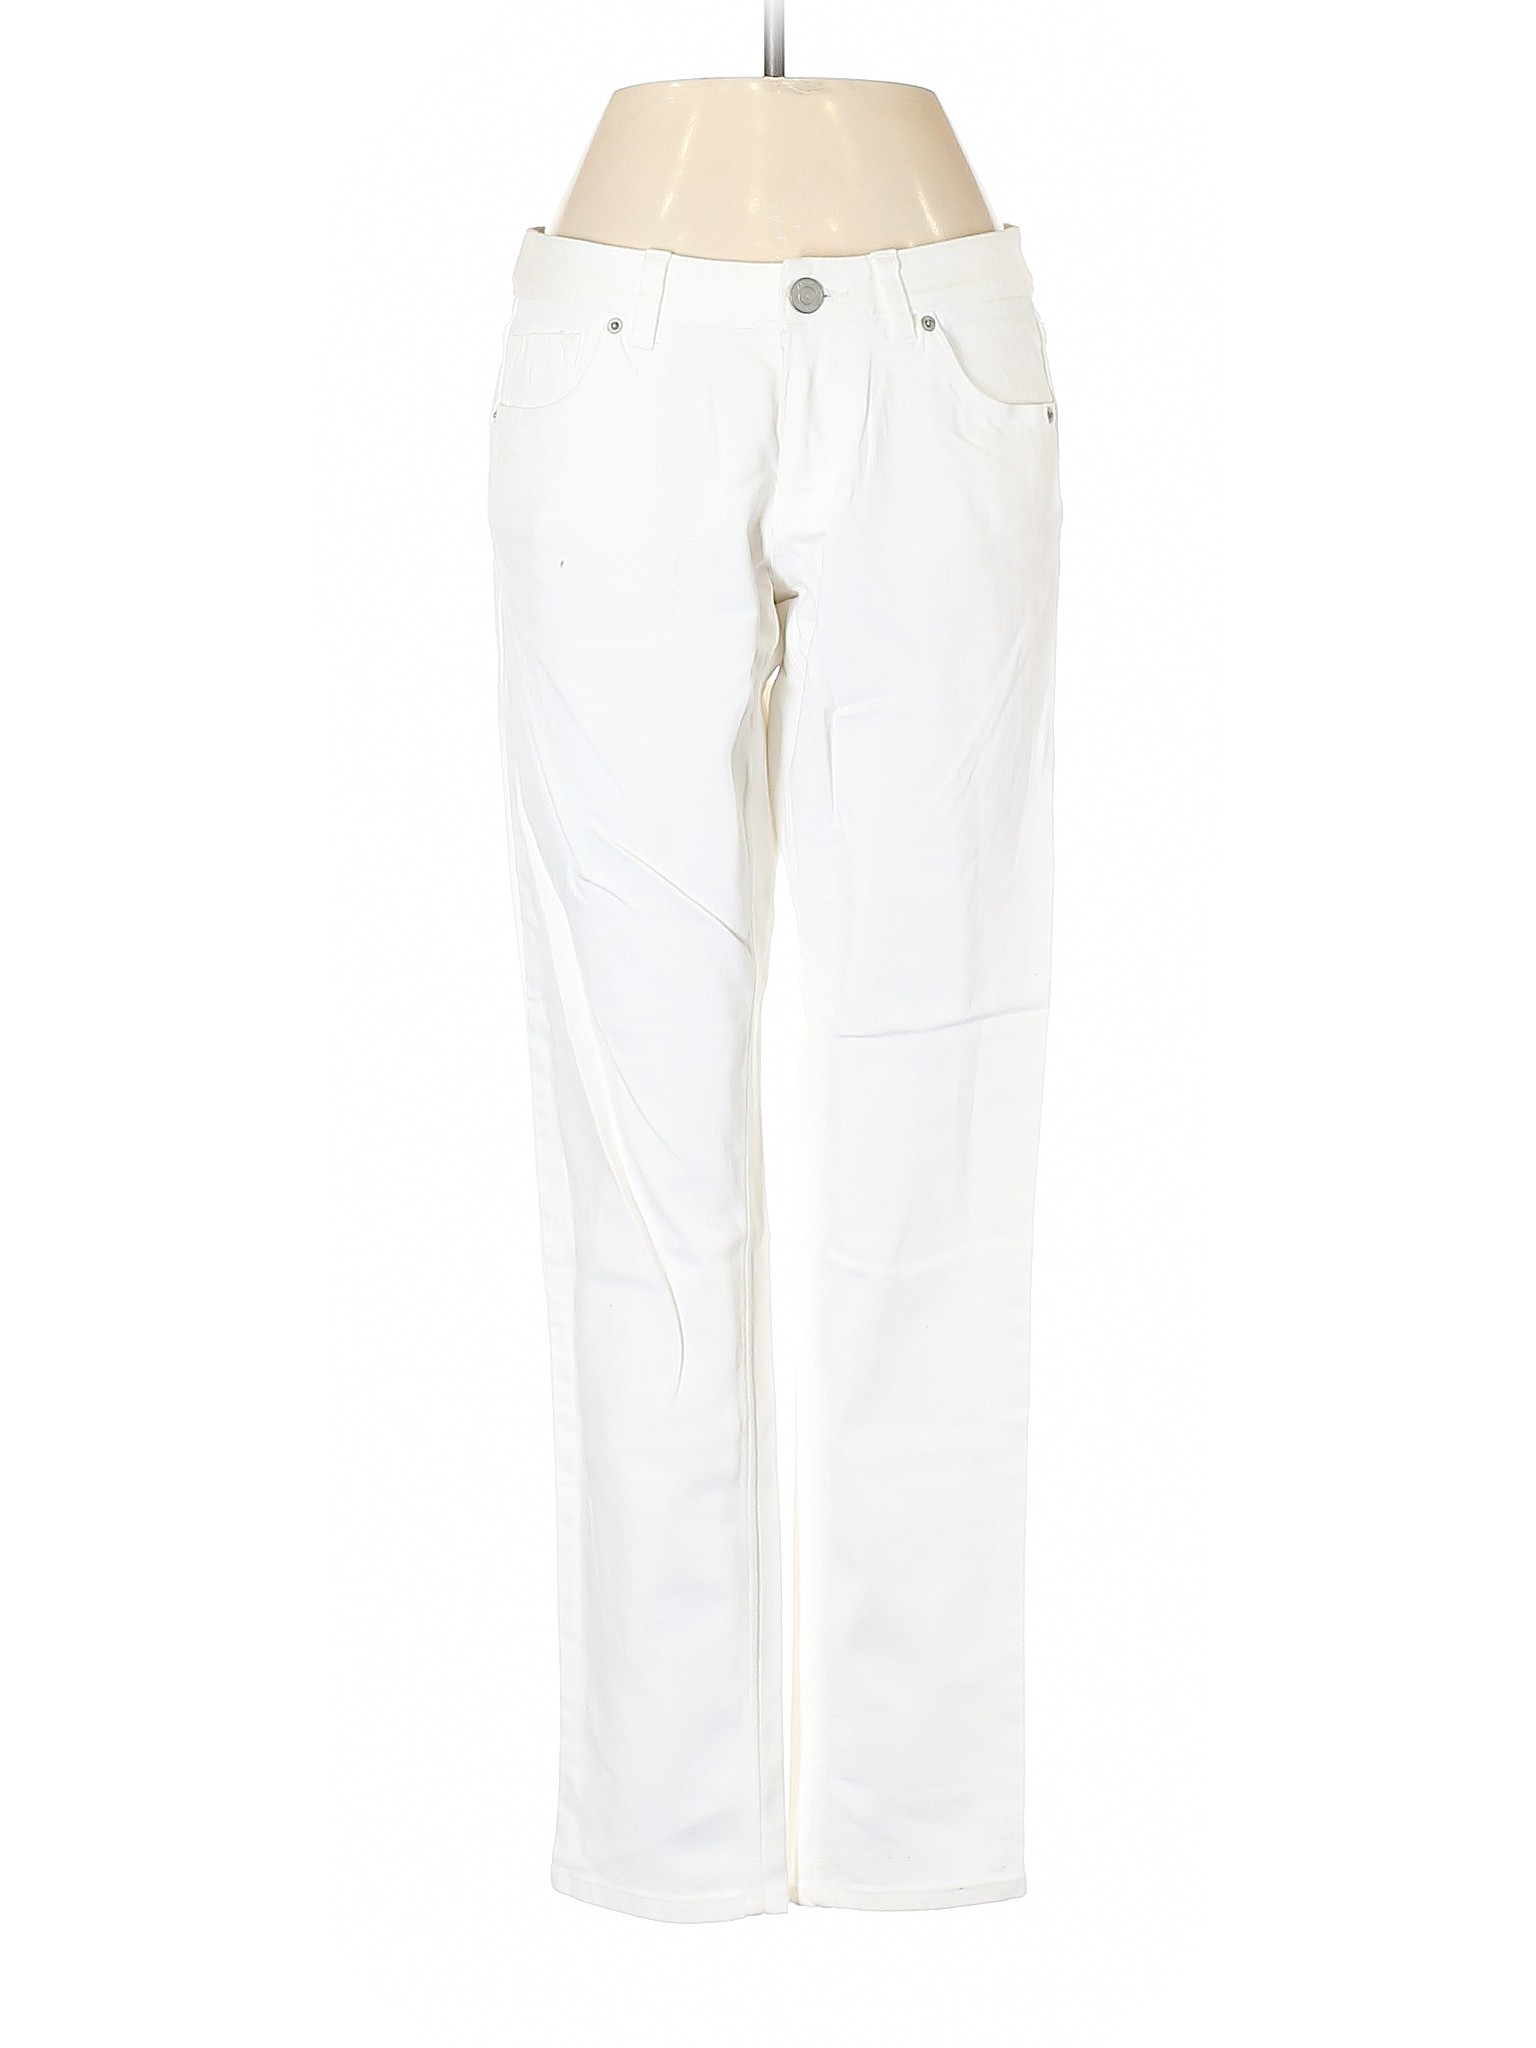 Lands' End Women White Jeans 2 Petites | eBay